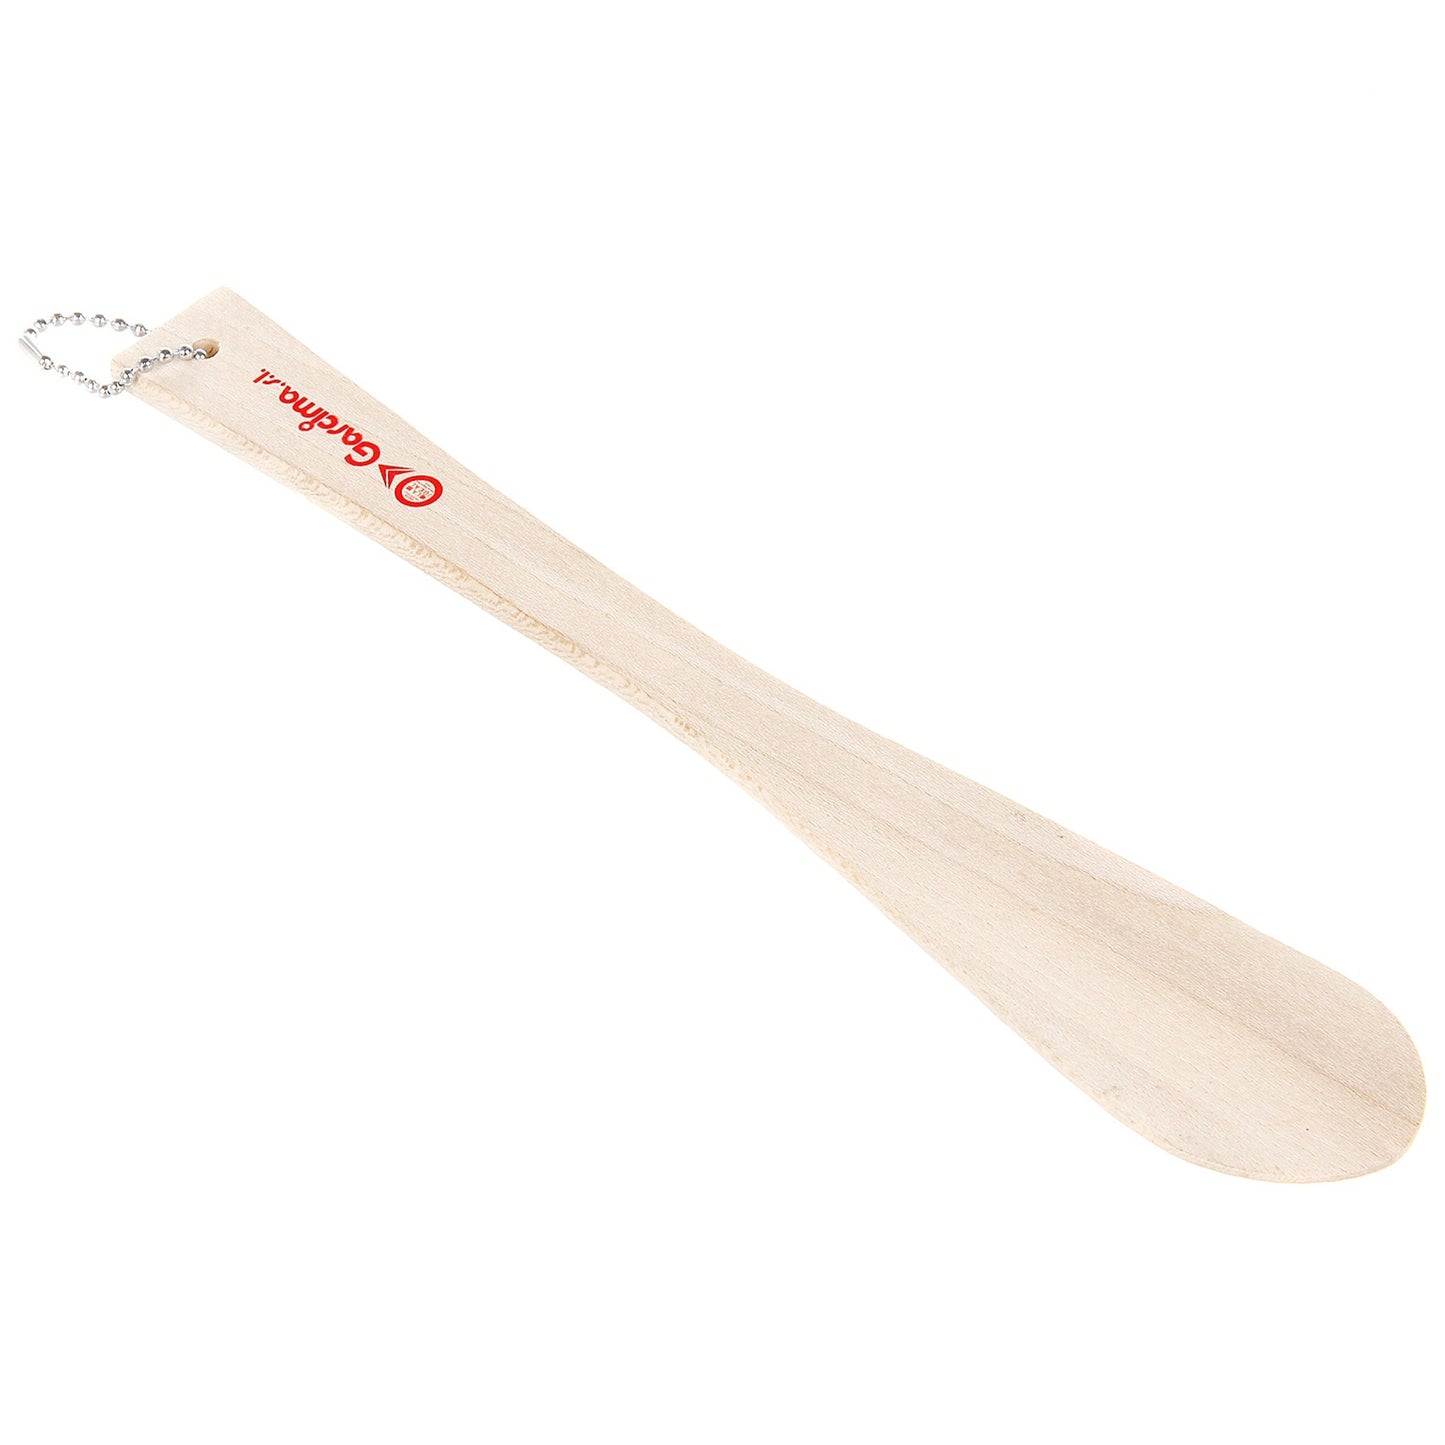 Wooden spatula 50cm long